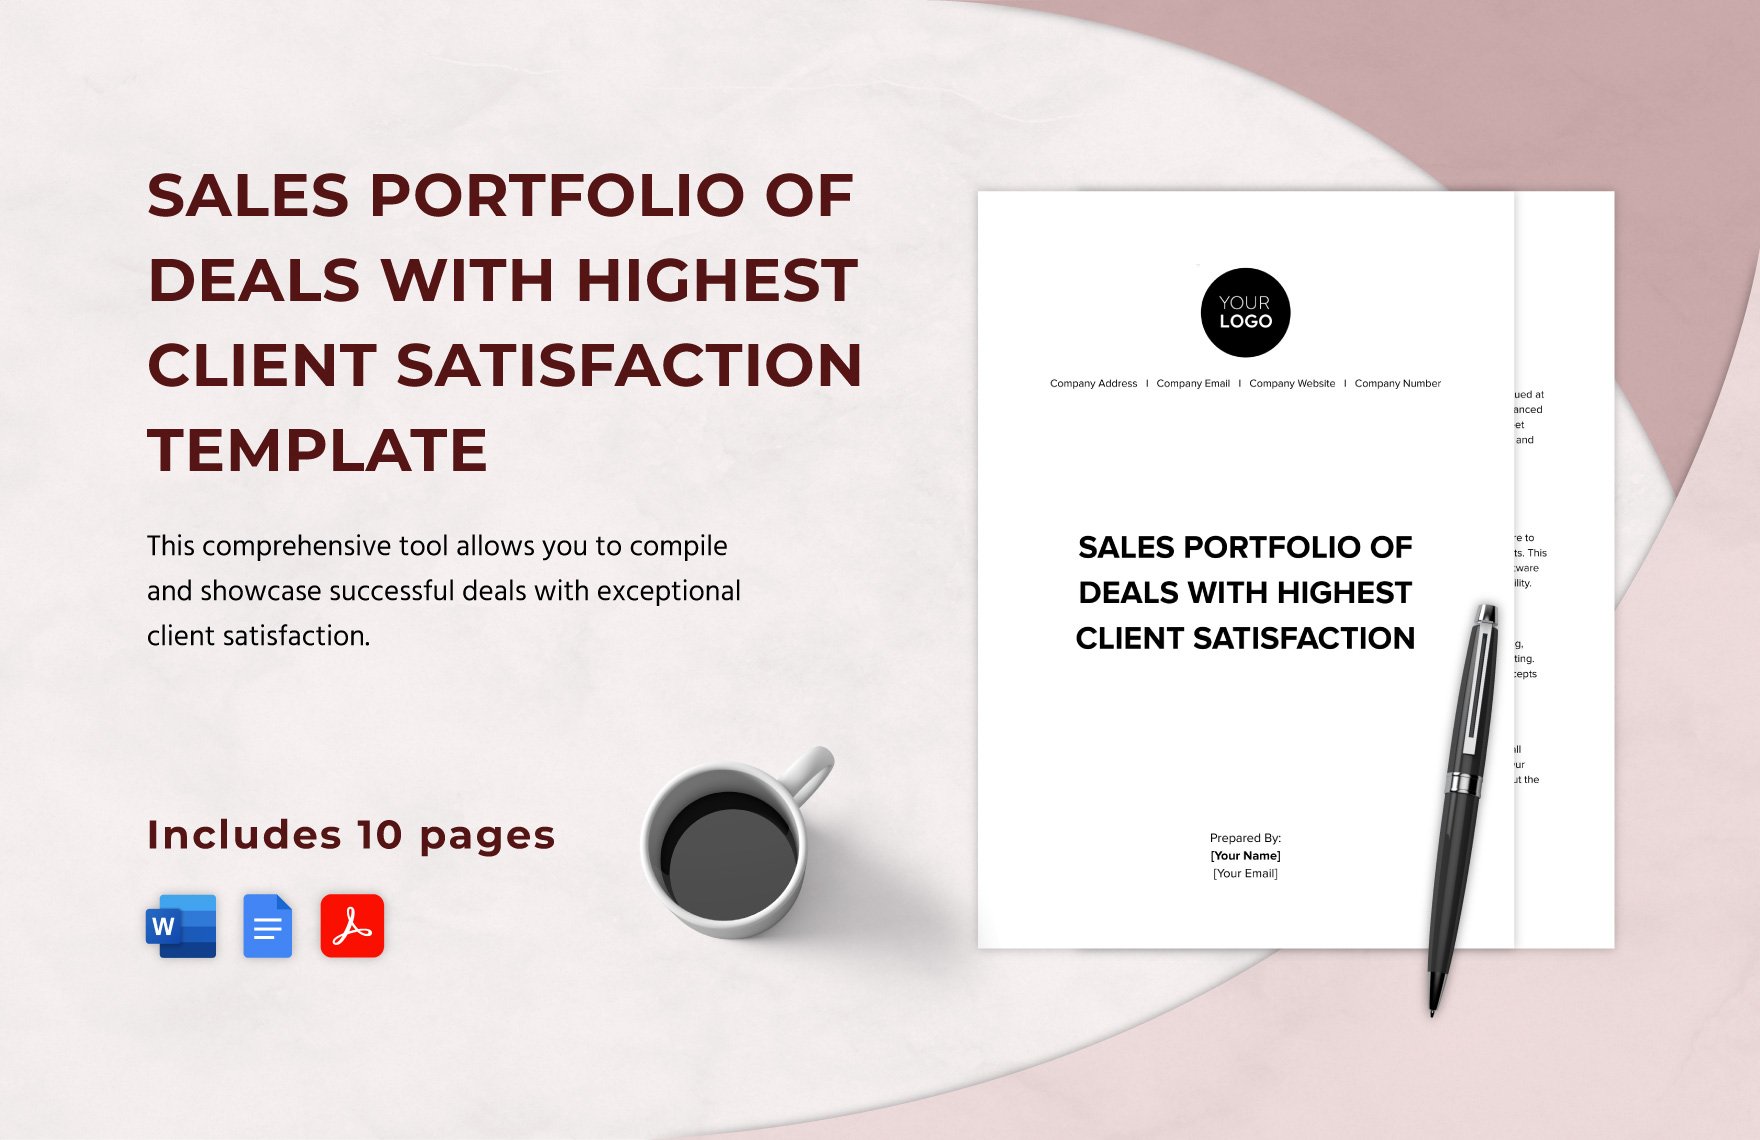 Sales Portfolio of Deals with Highest Client Satisfaction Template